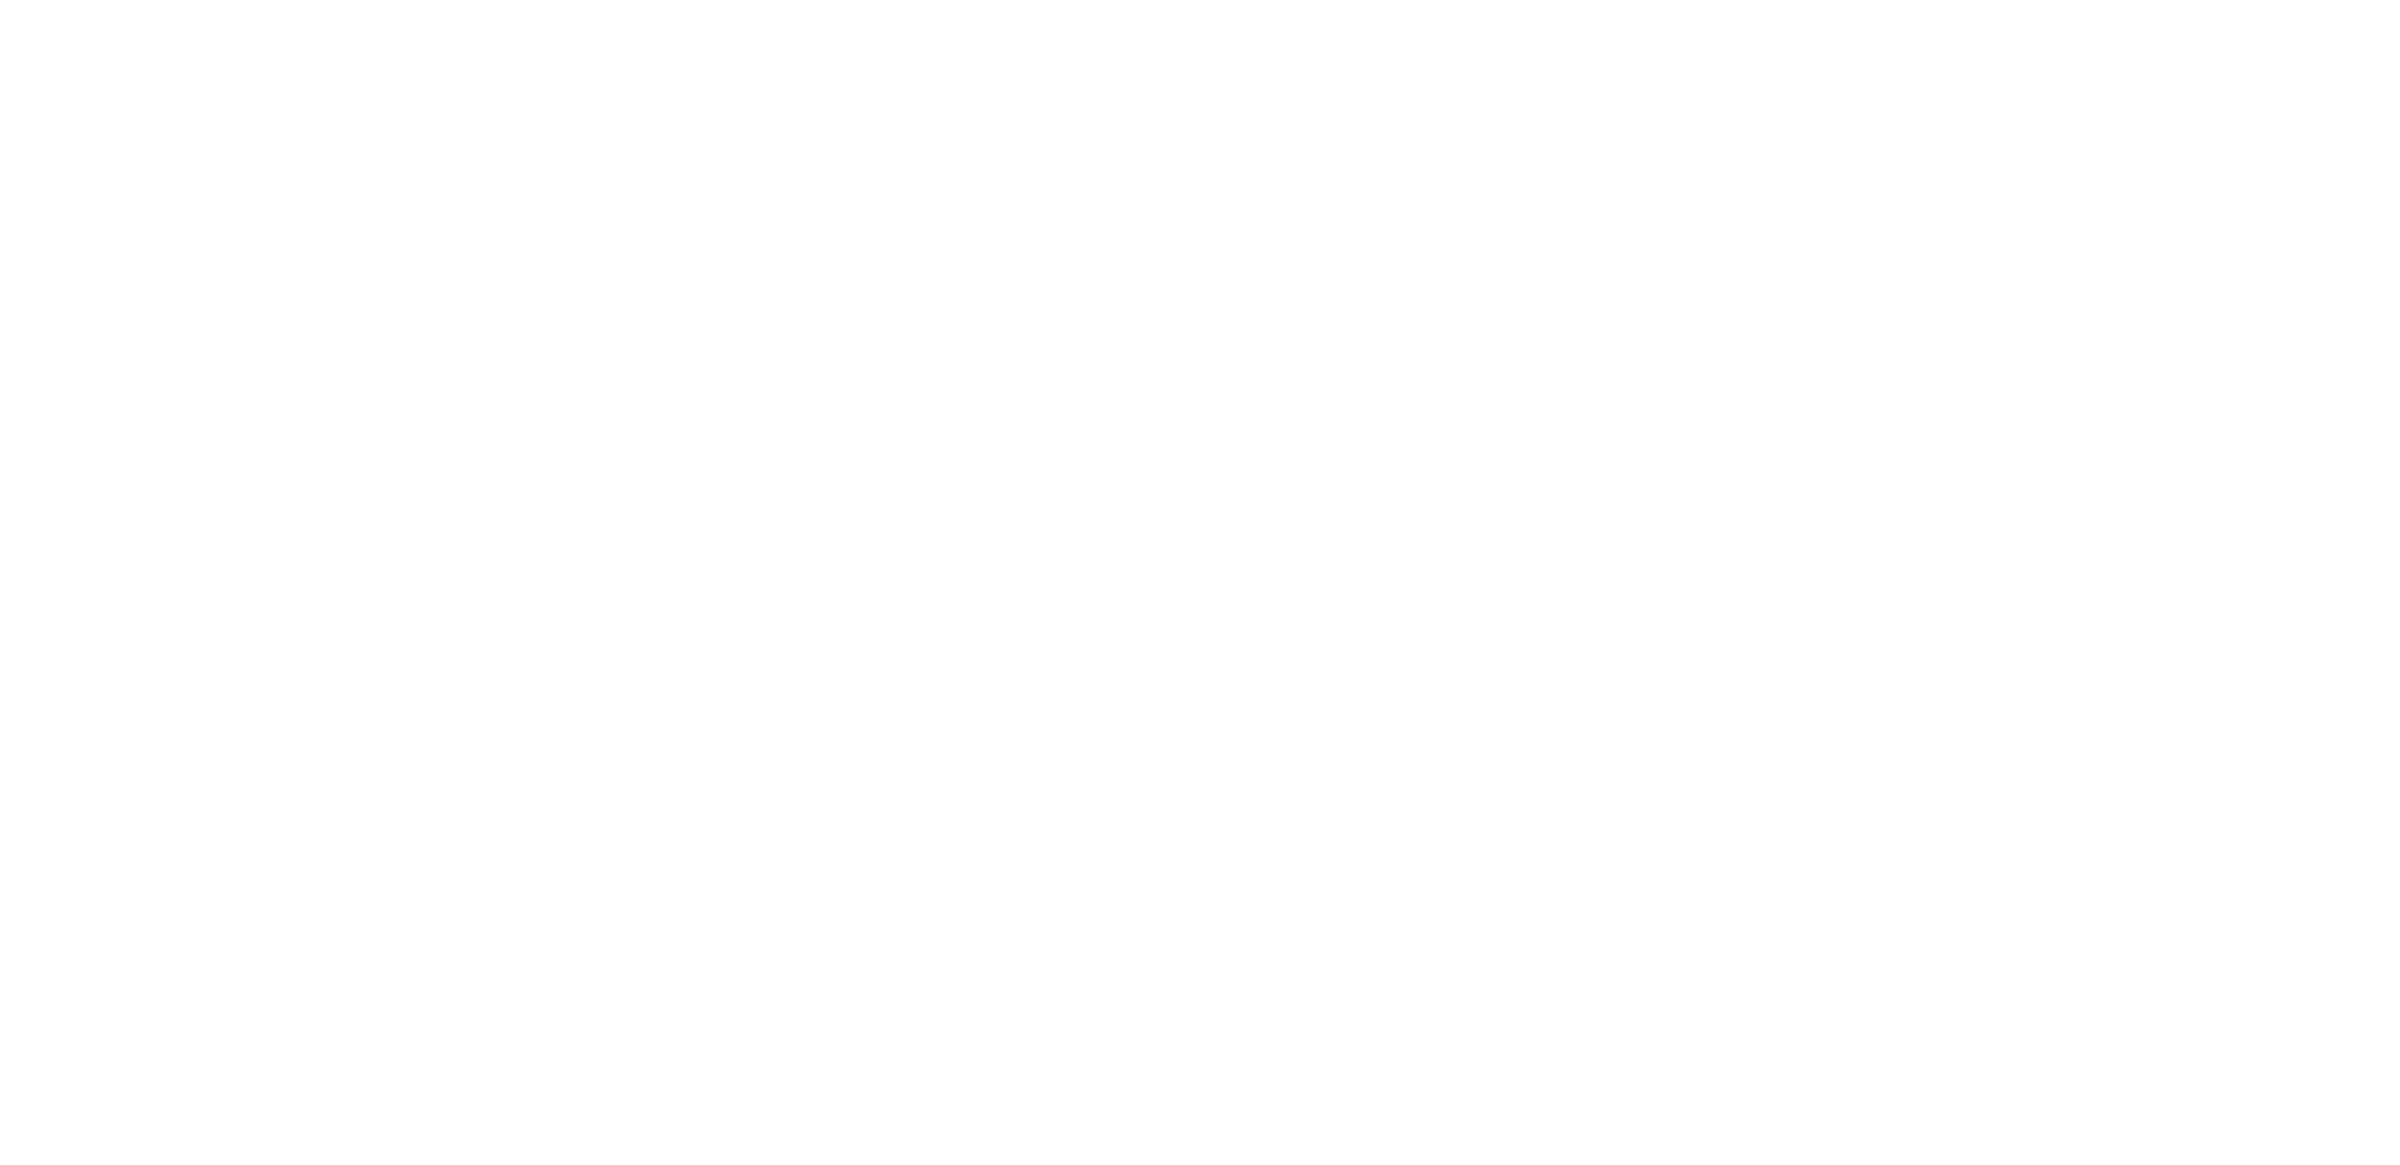 LG TV image